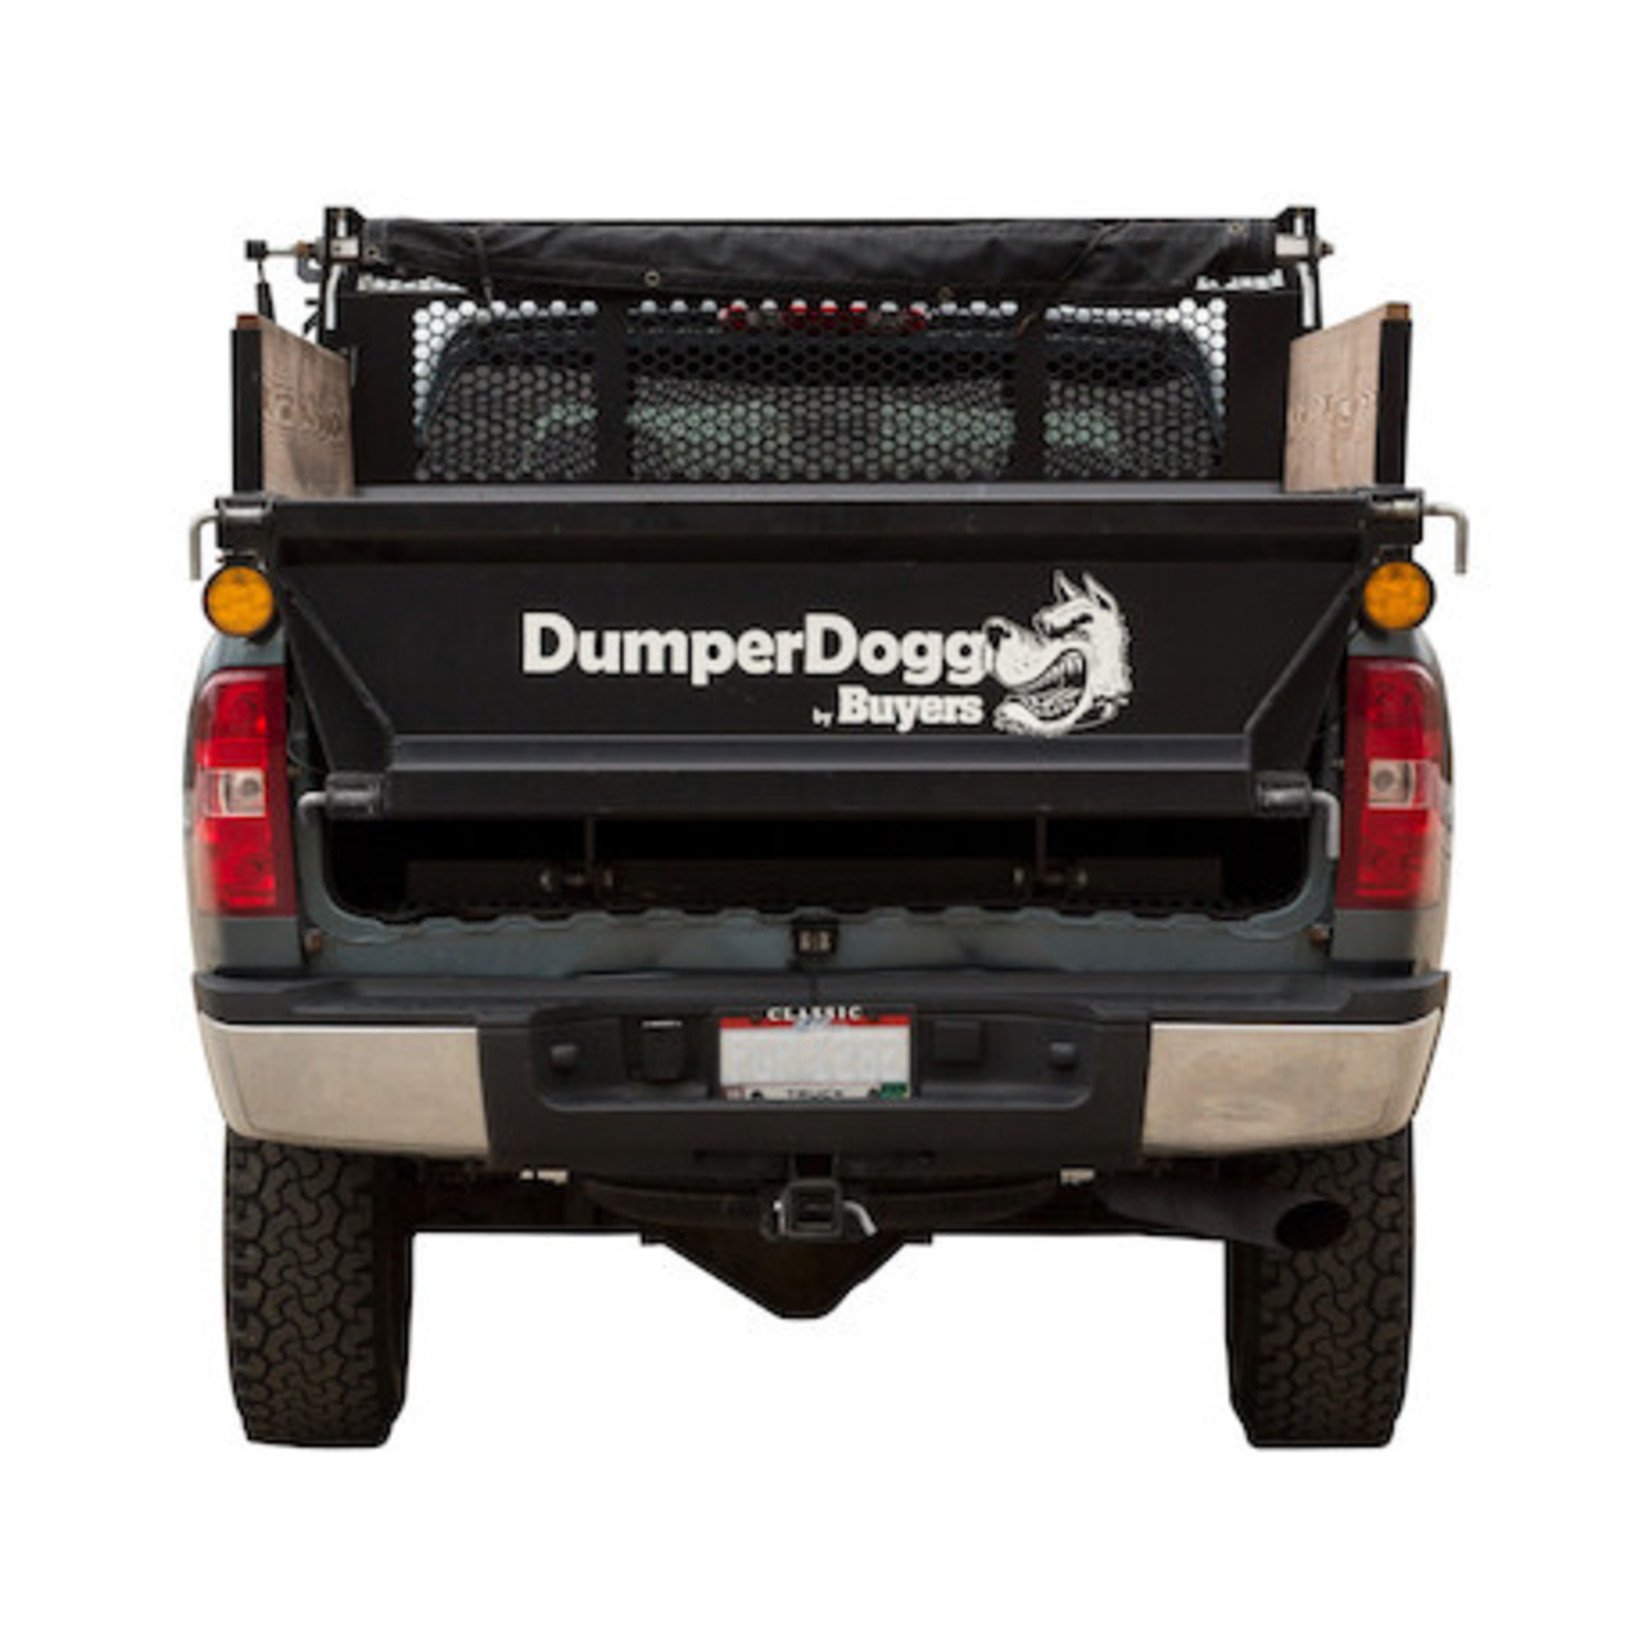 DumperDogg DumperDogg® Steel Dump Inserts